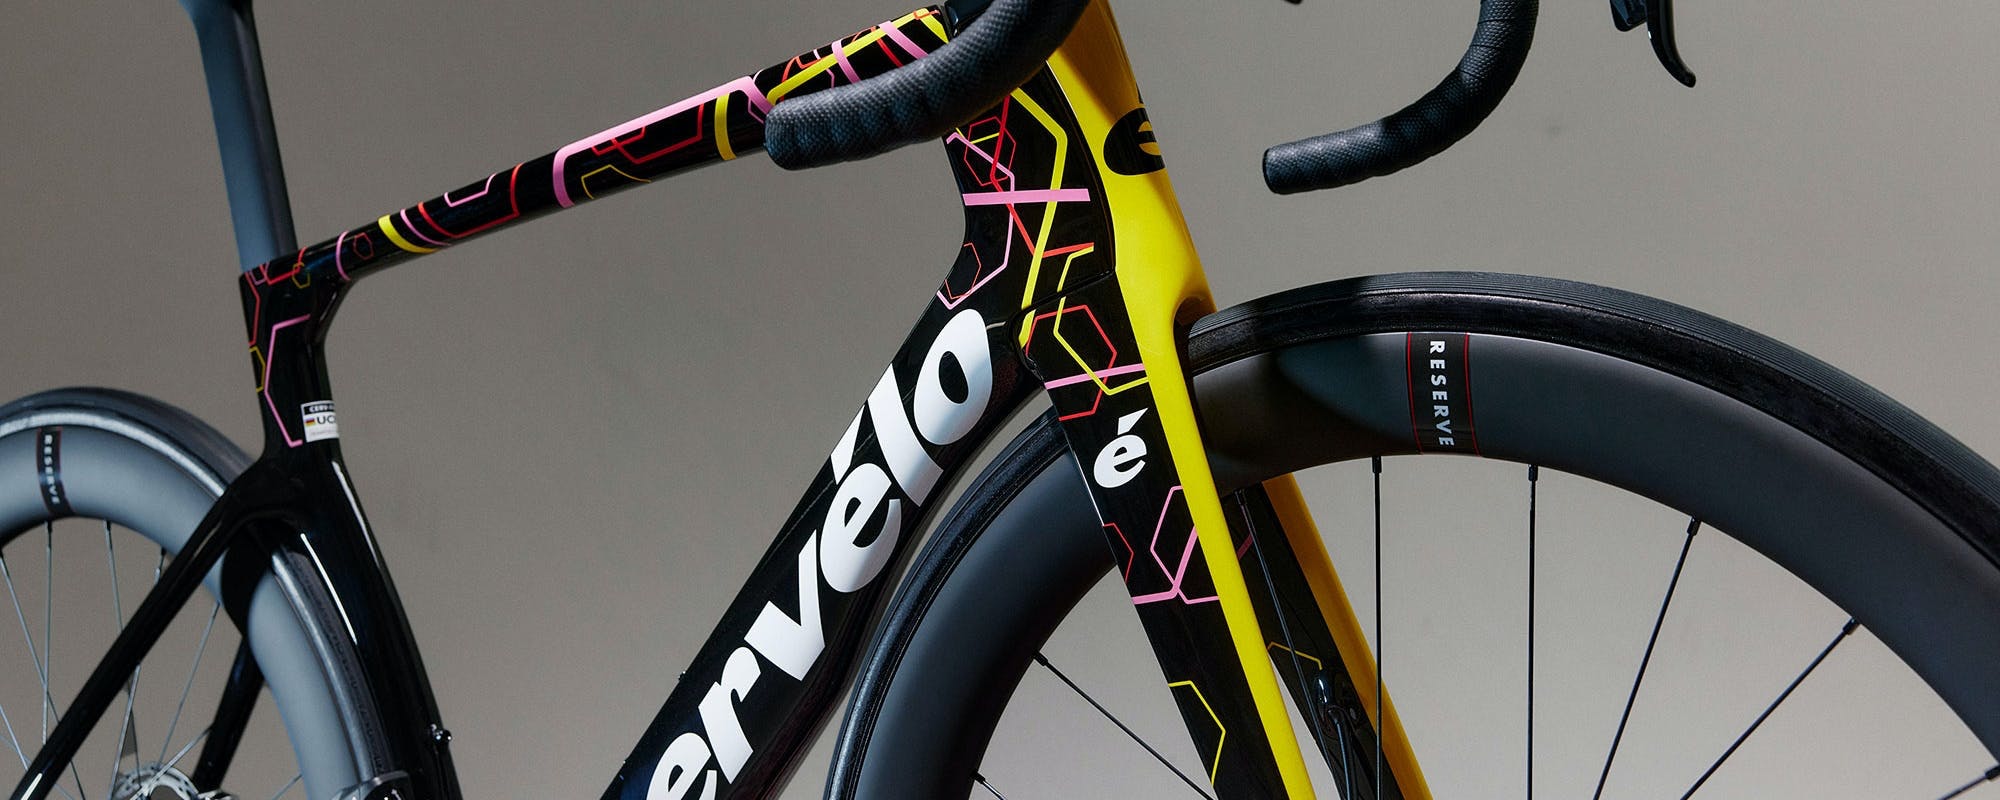 Cervelo S5 Special Edition Celebration Frameset | Strictly Bicycles